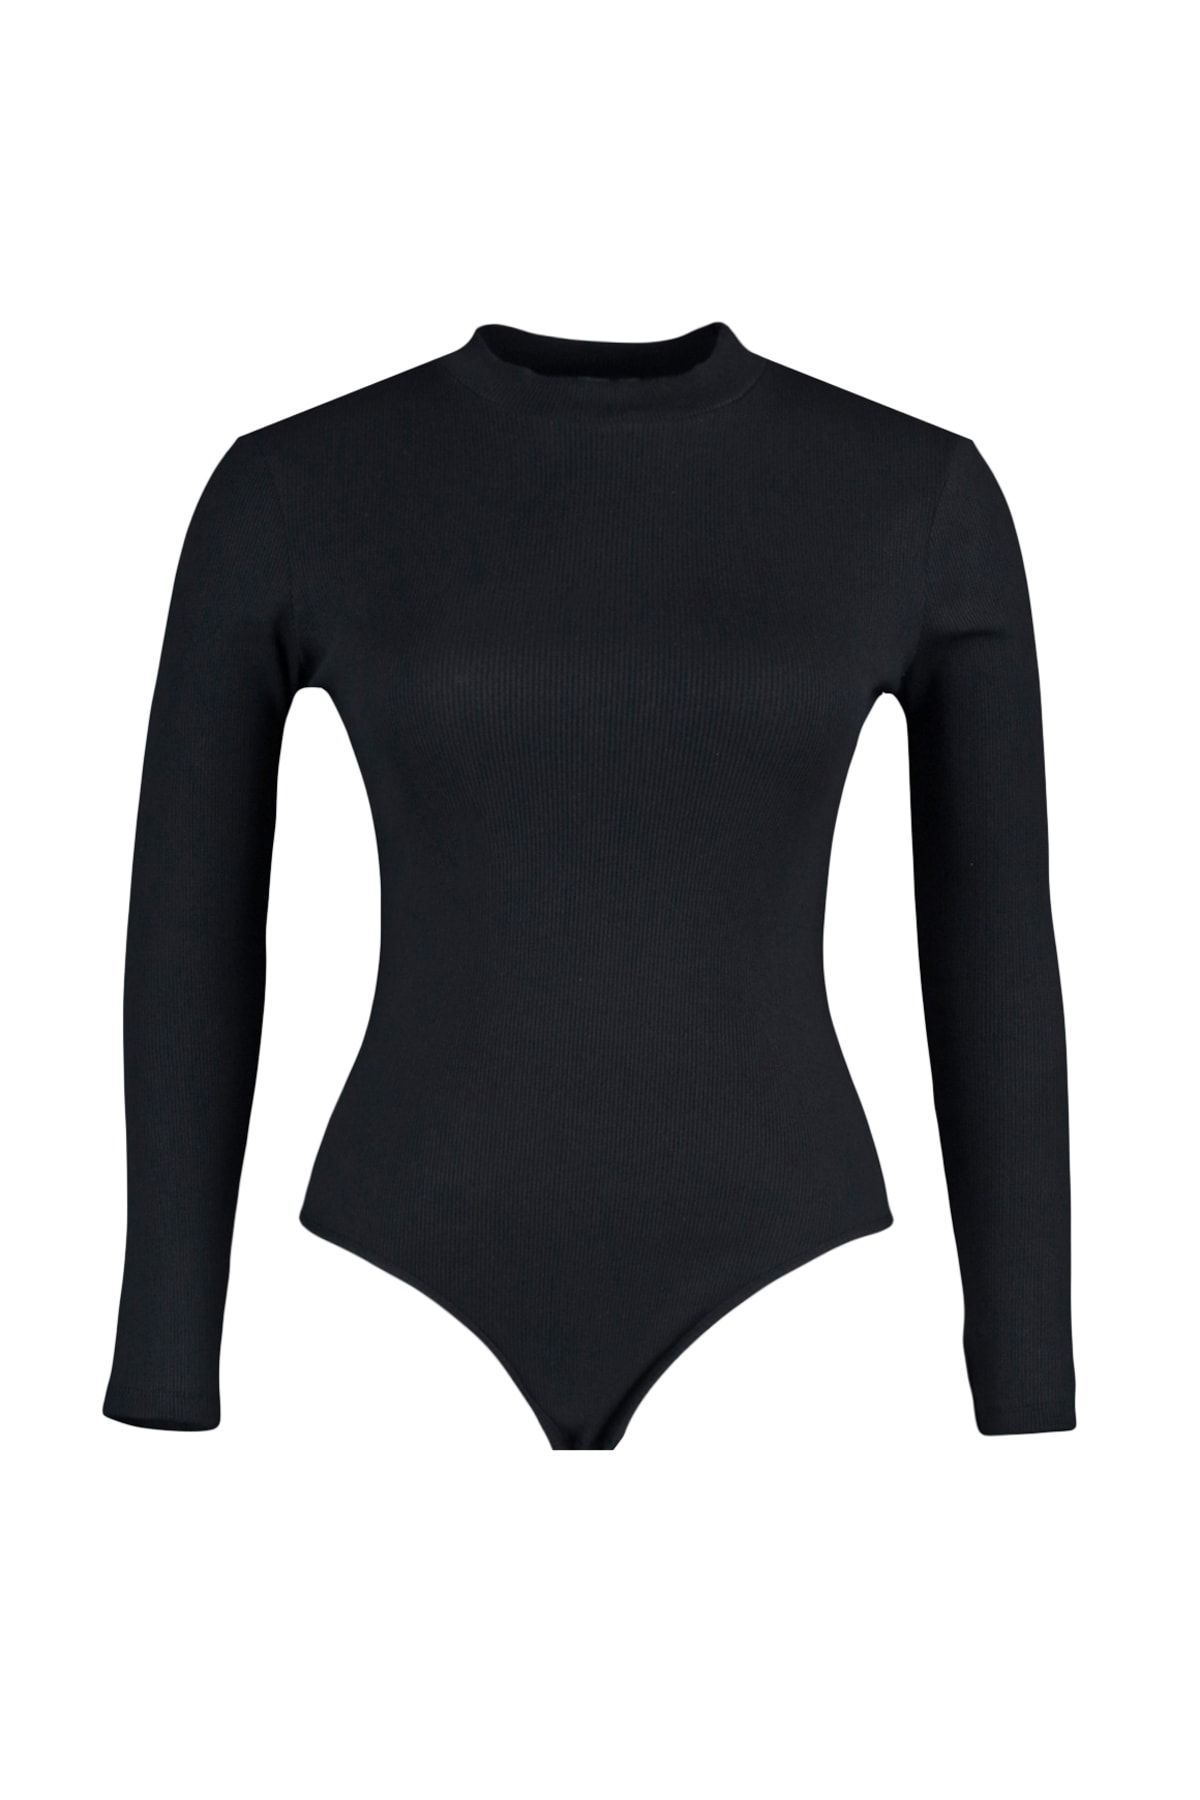 Trendyol Flexible Knitted Bodysuit 2024, Buy Trendyol Online